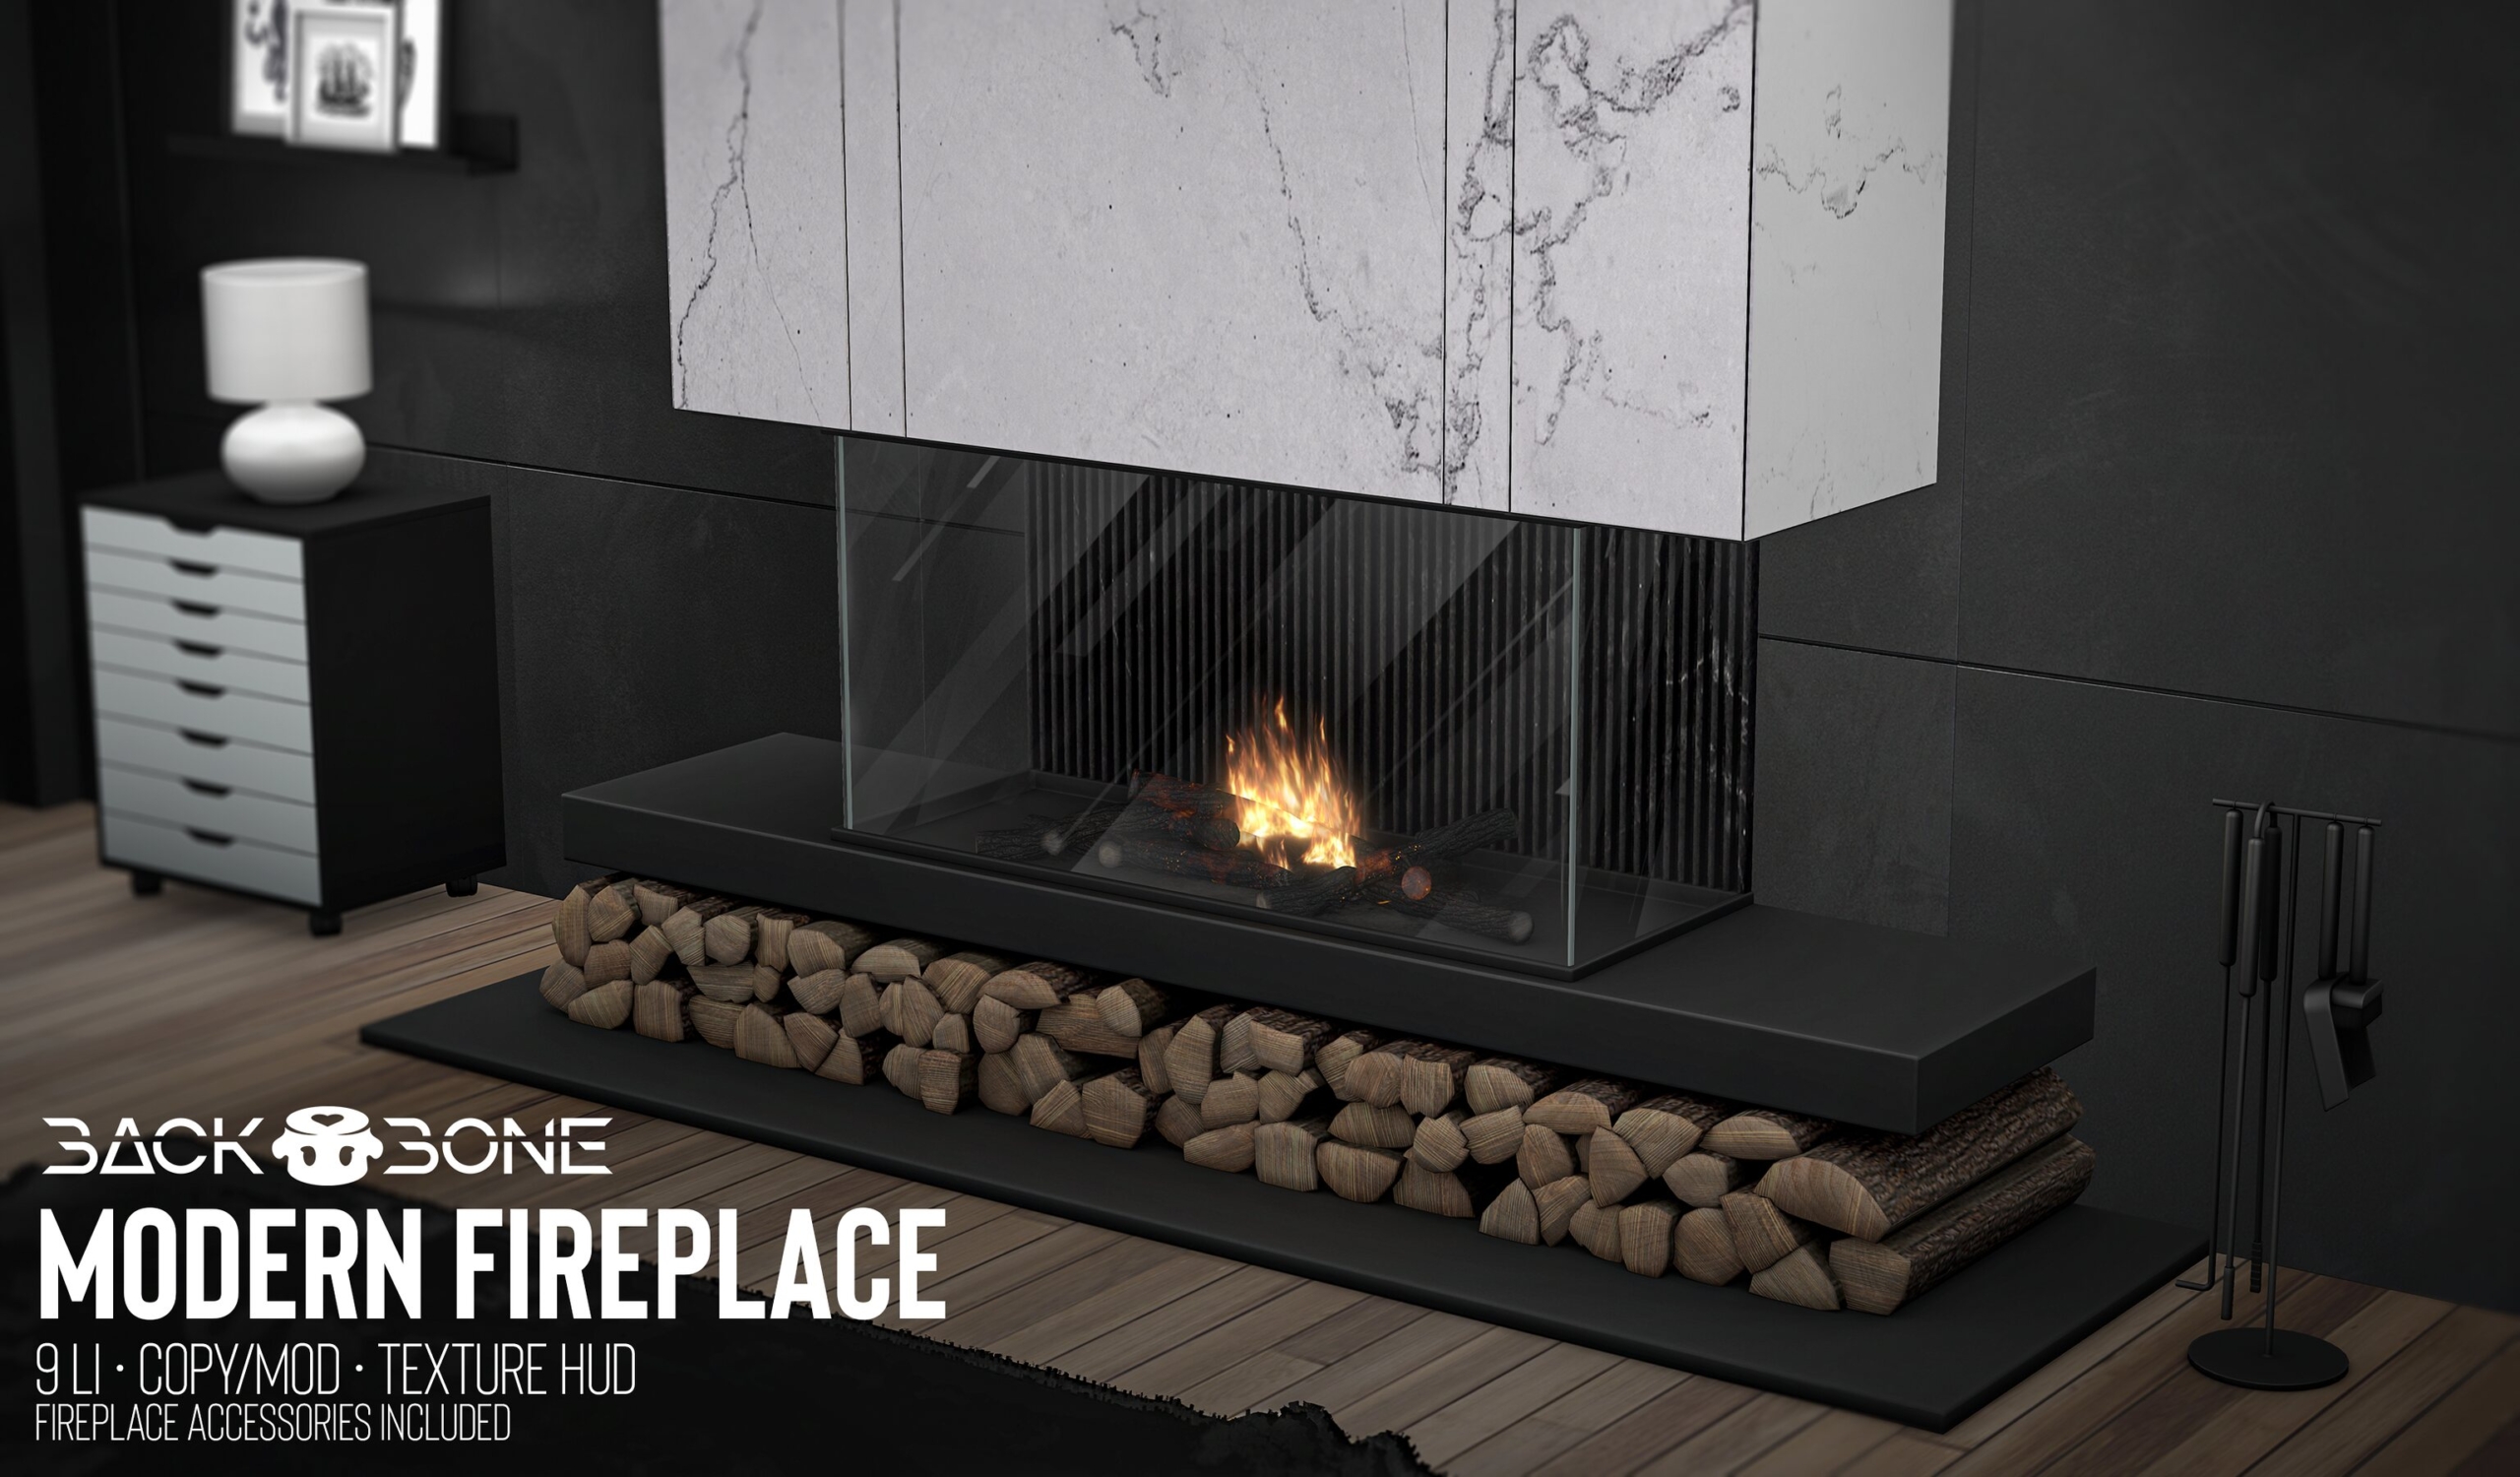 BackBone – Modern Fireplace